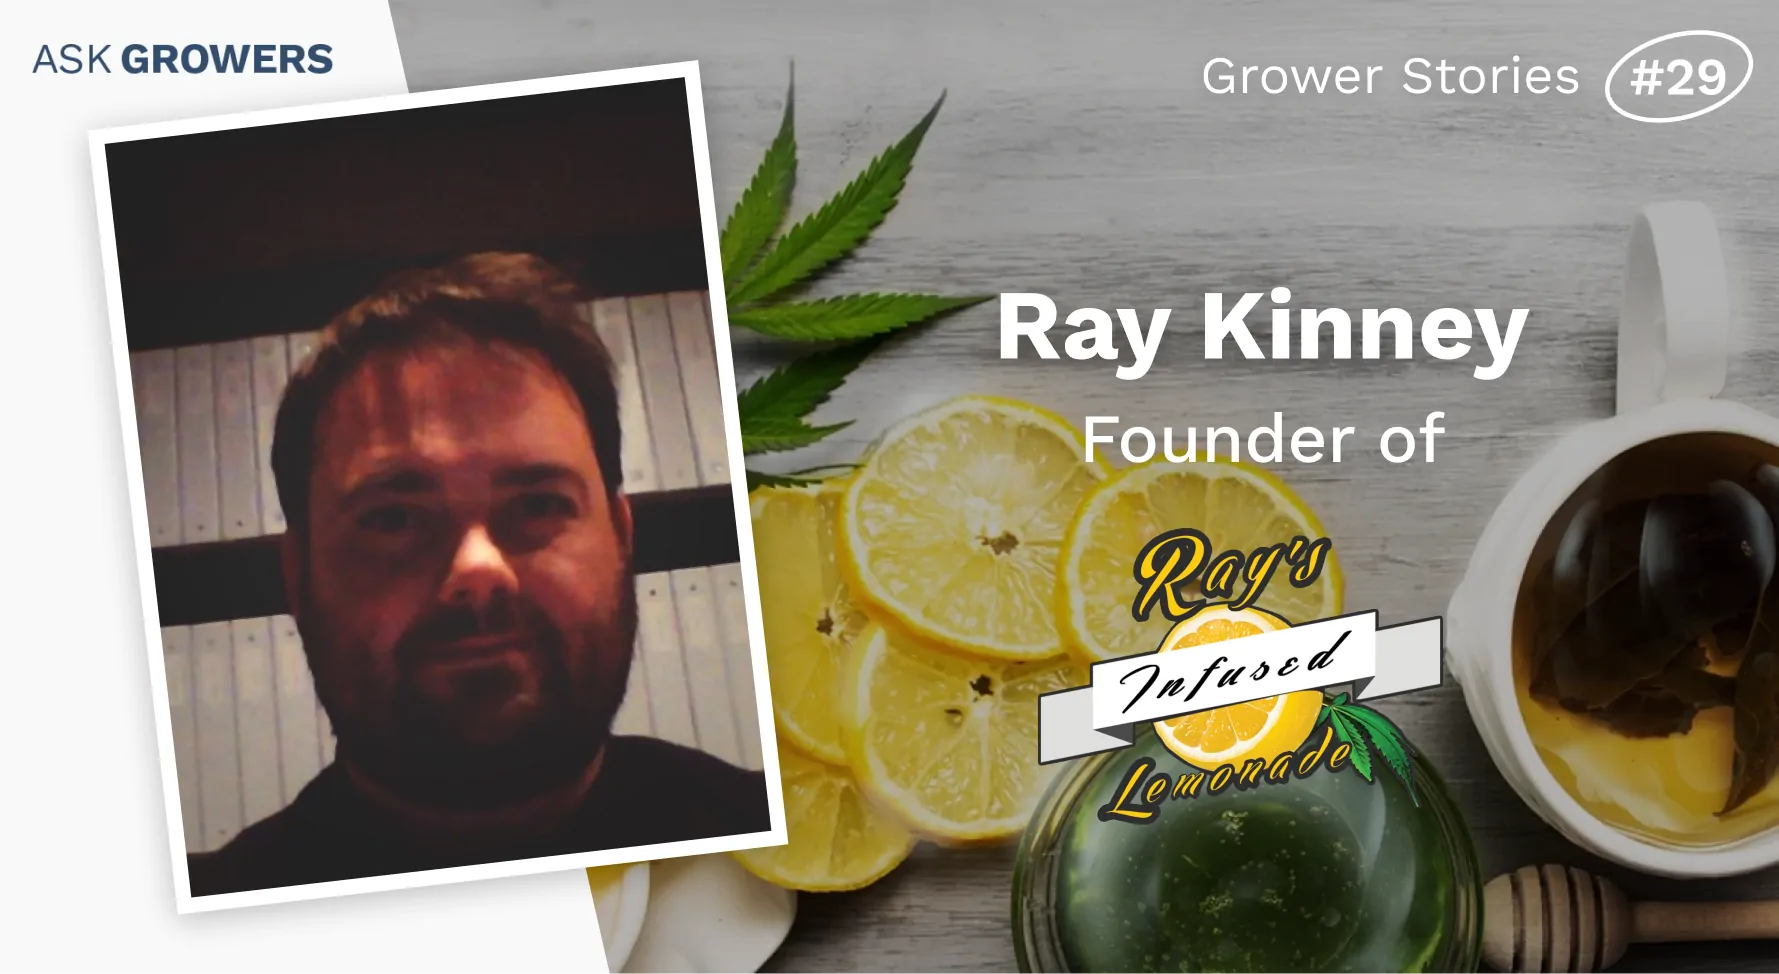 Grower Stories #29: Ray Kinney